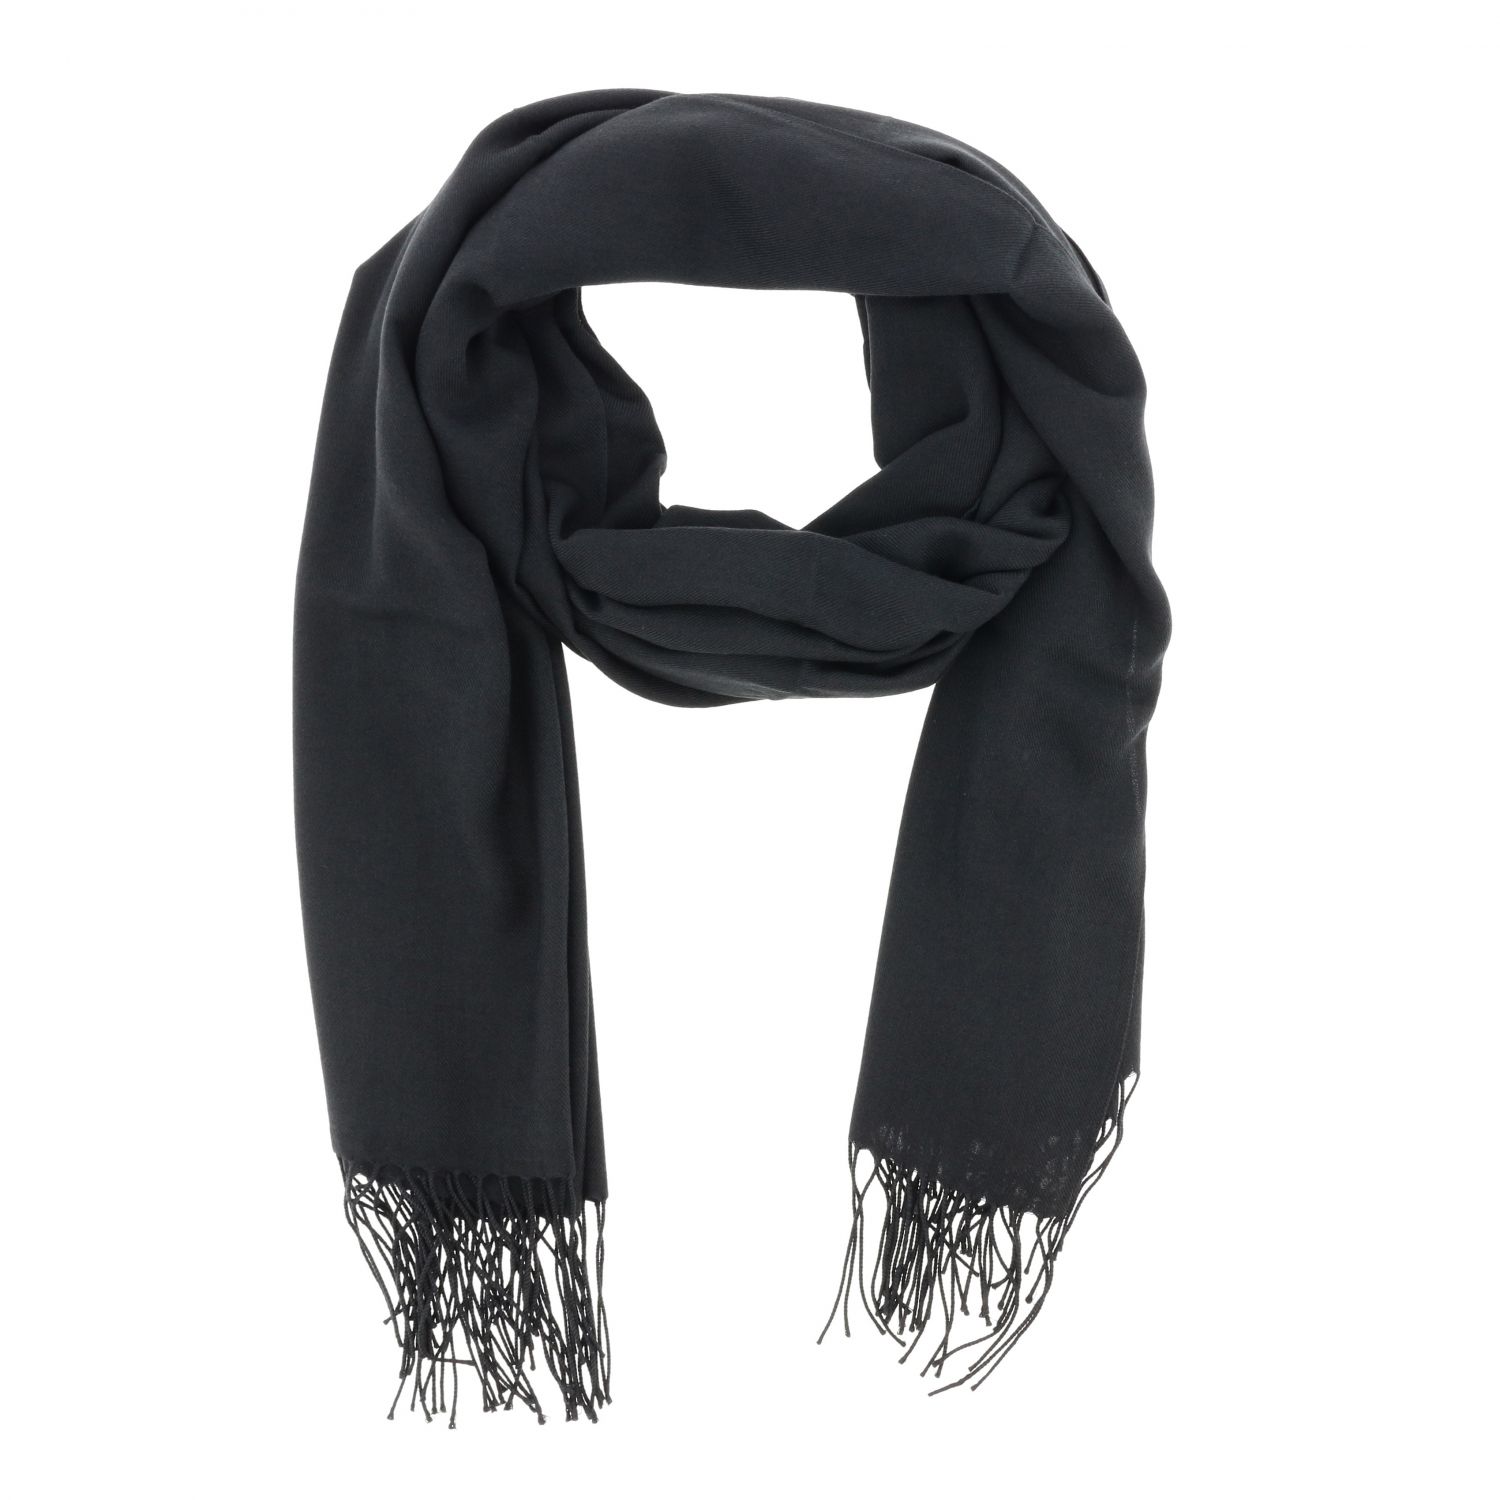 Emporio Armani Outlet: scarf for man - Black | Emporio Armani scarf ...